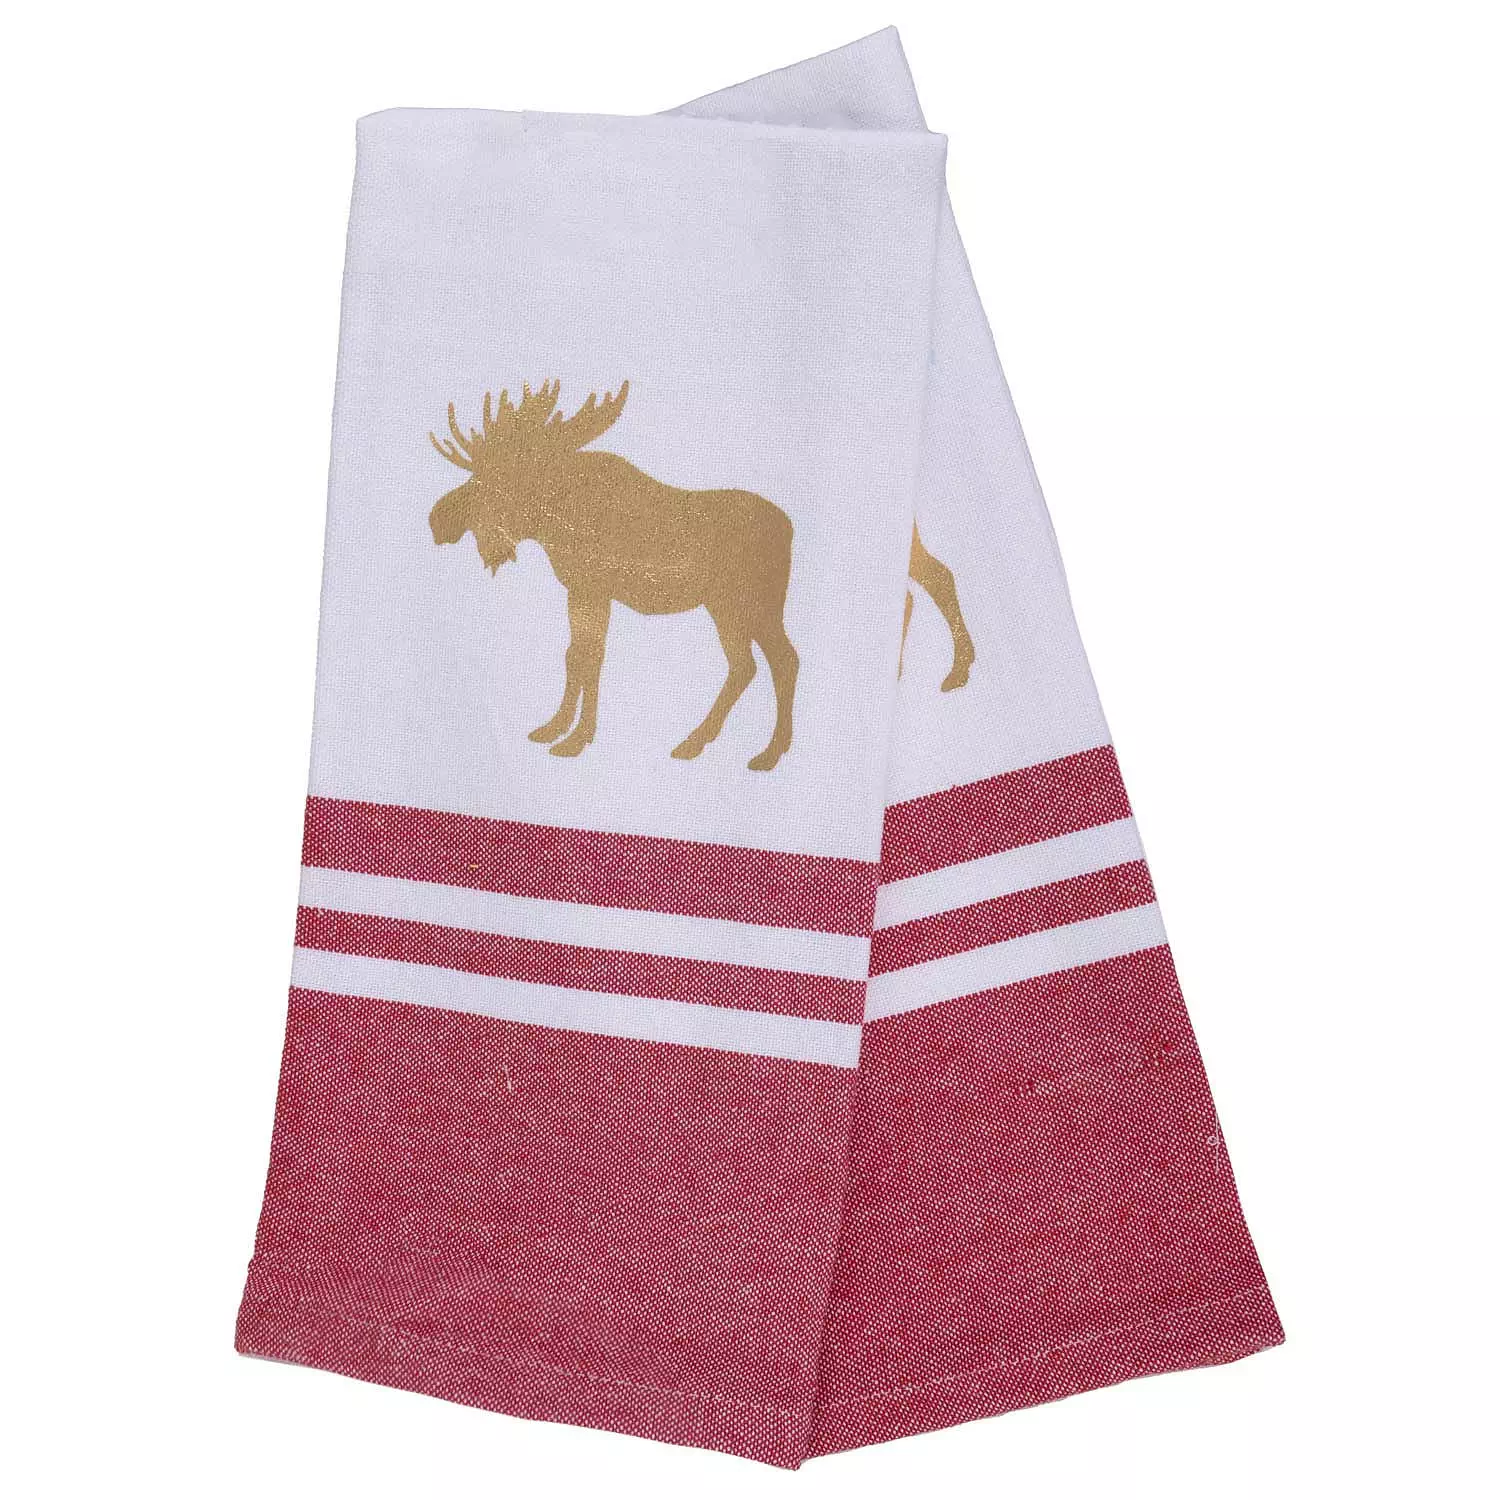 Kitchen towels with metallic print, 18"x28", pk. of 2, moose